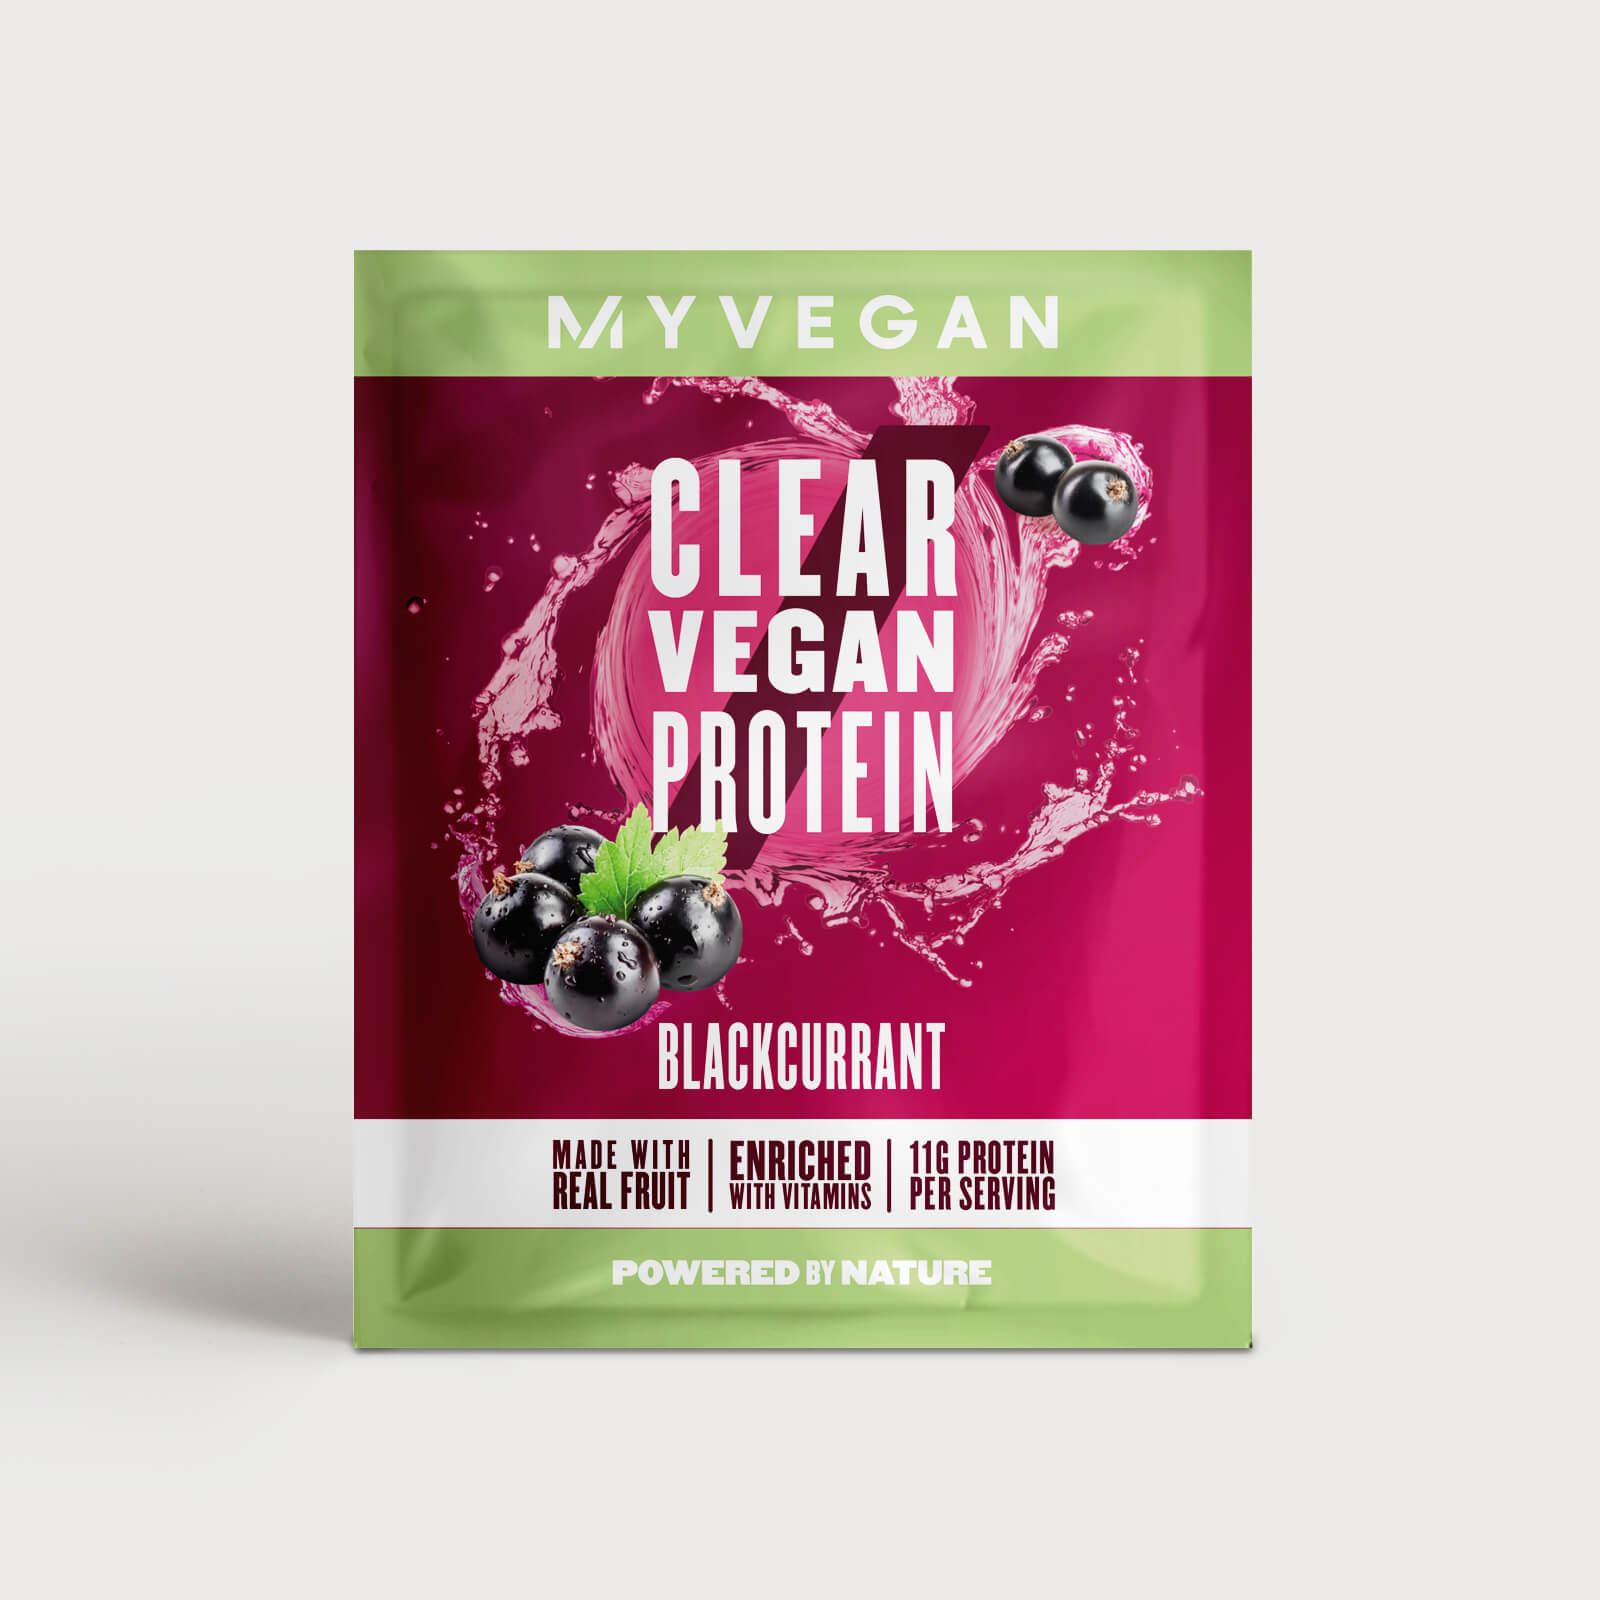 Myvegan Clear Vegan Protein, 16g (Sample) - 16g - Blackcurrant